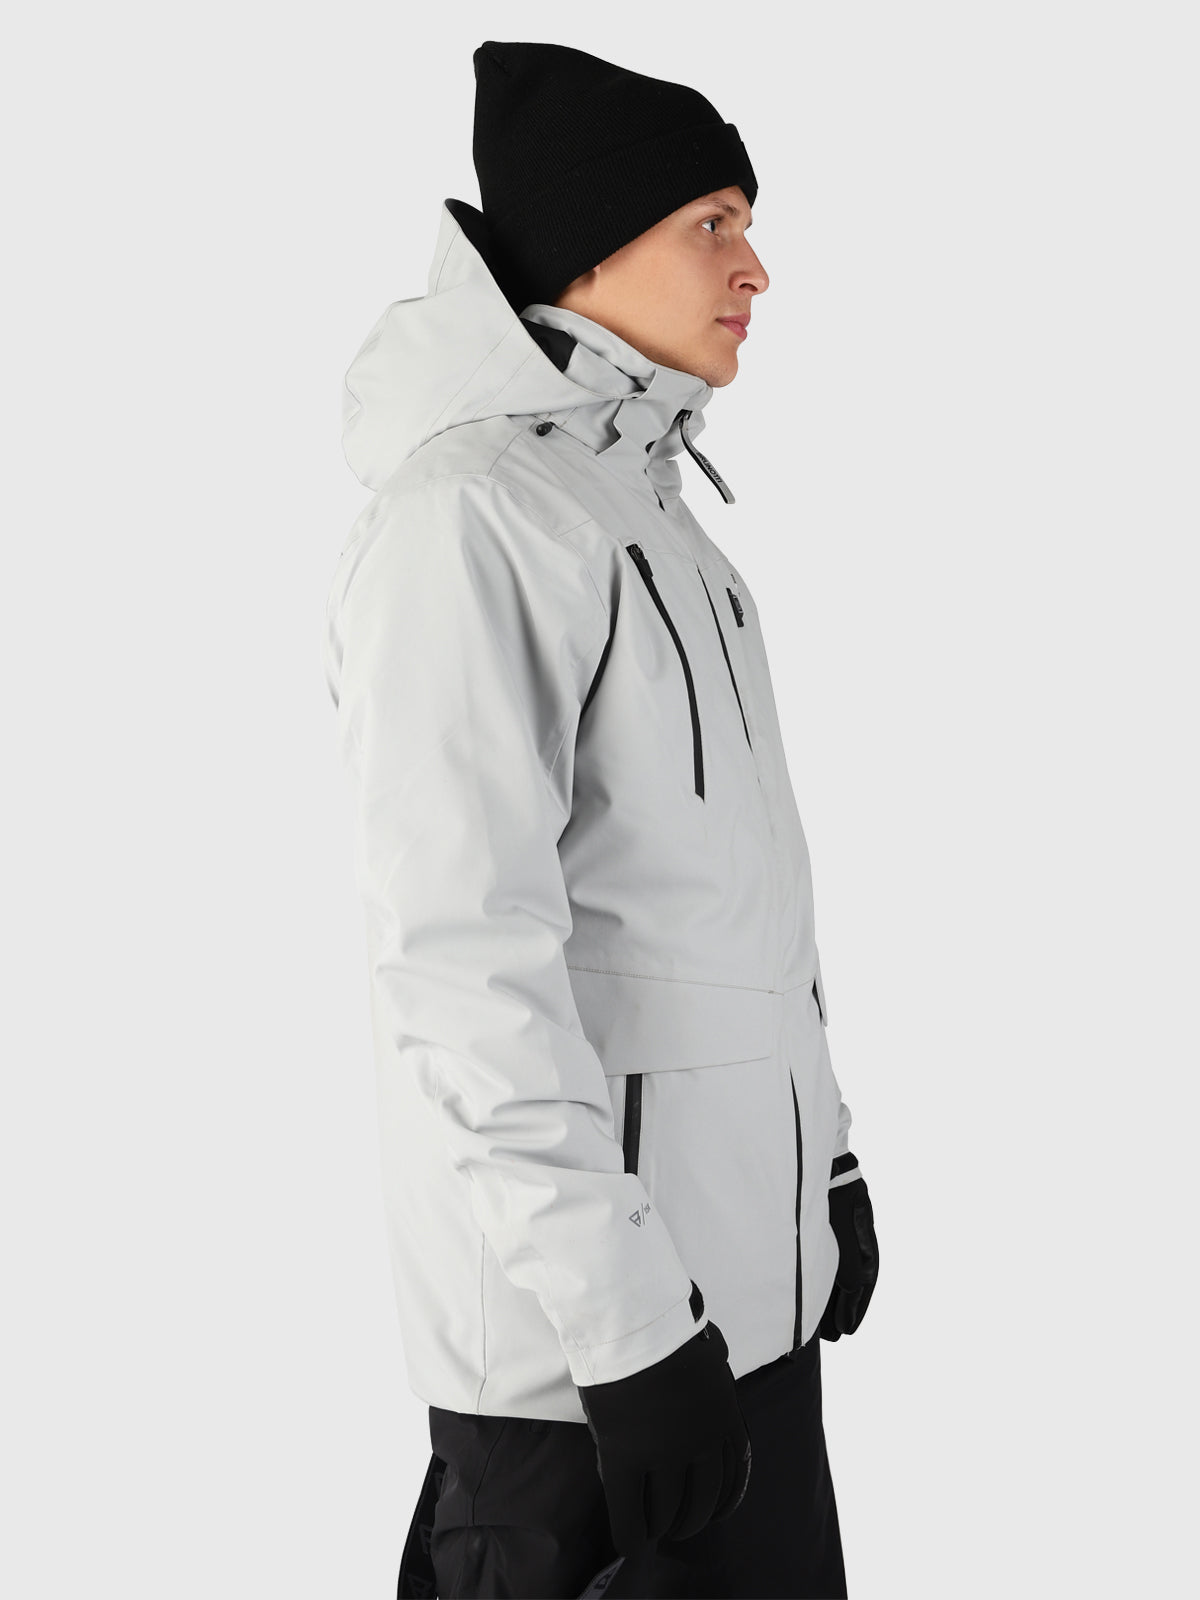 Baron-Heat Men Snow Jacket with Heat Panels | Grey